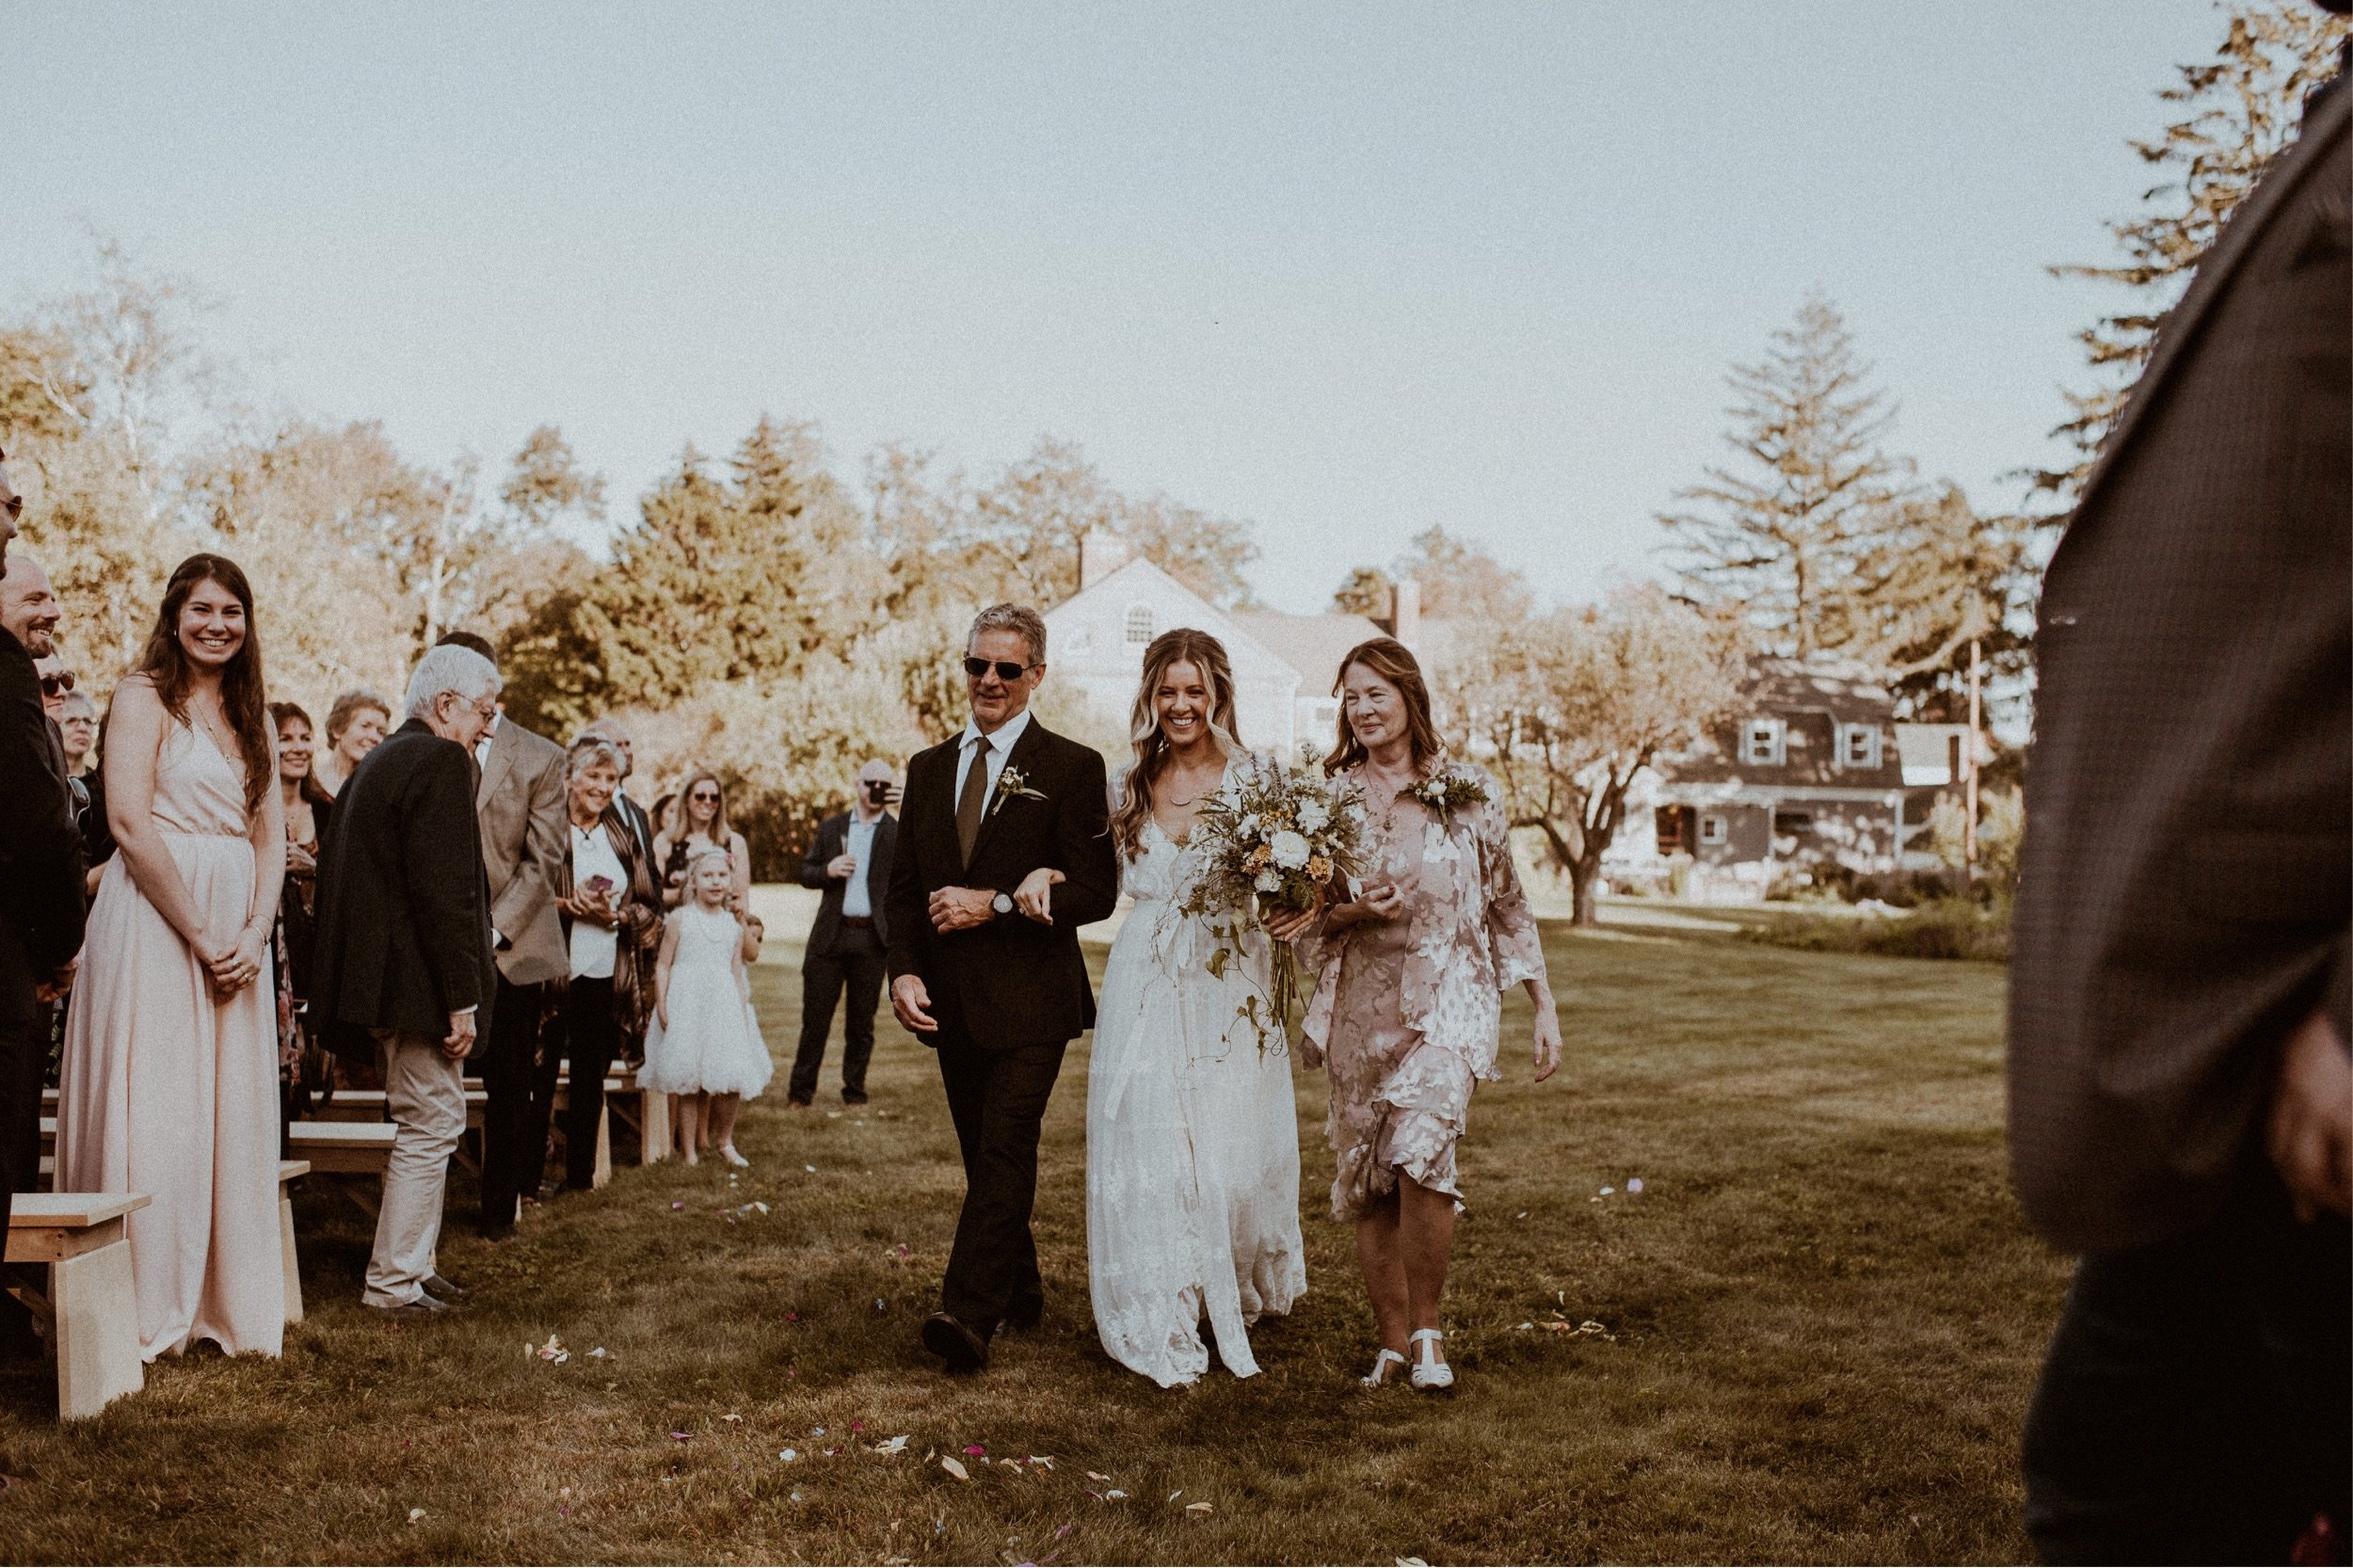 071_Gloriosa & Co Fall Wedding at The Curtis House Ashfield MA - Vanessa Alves Photography.jpg